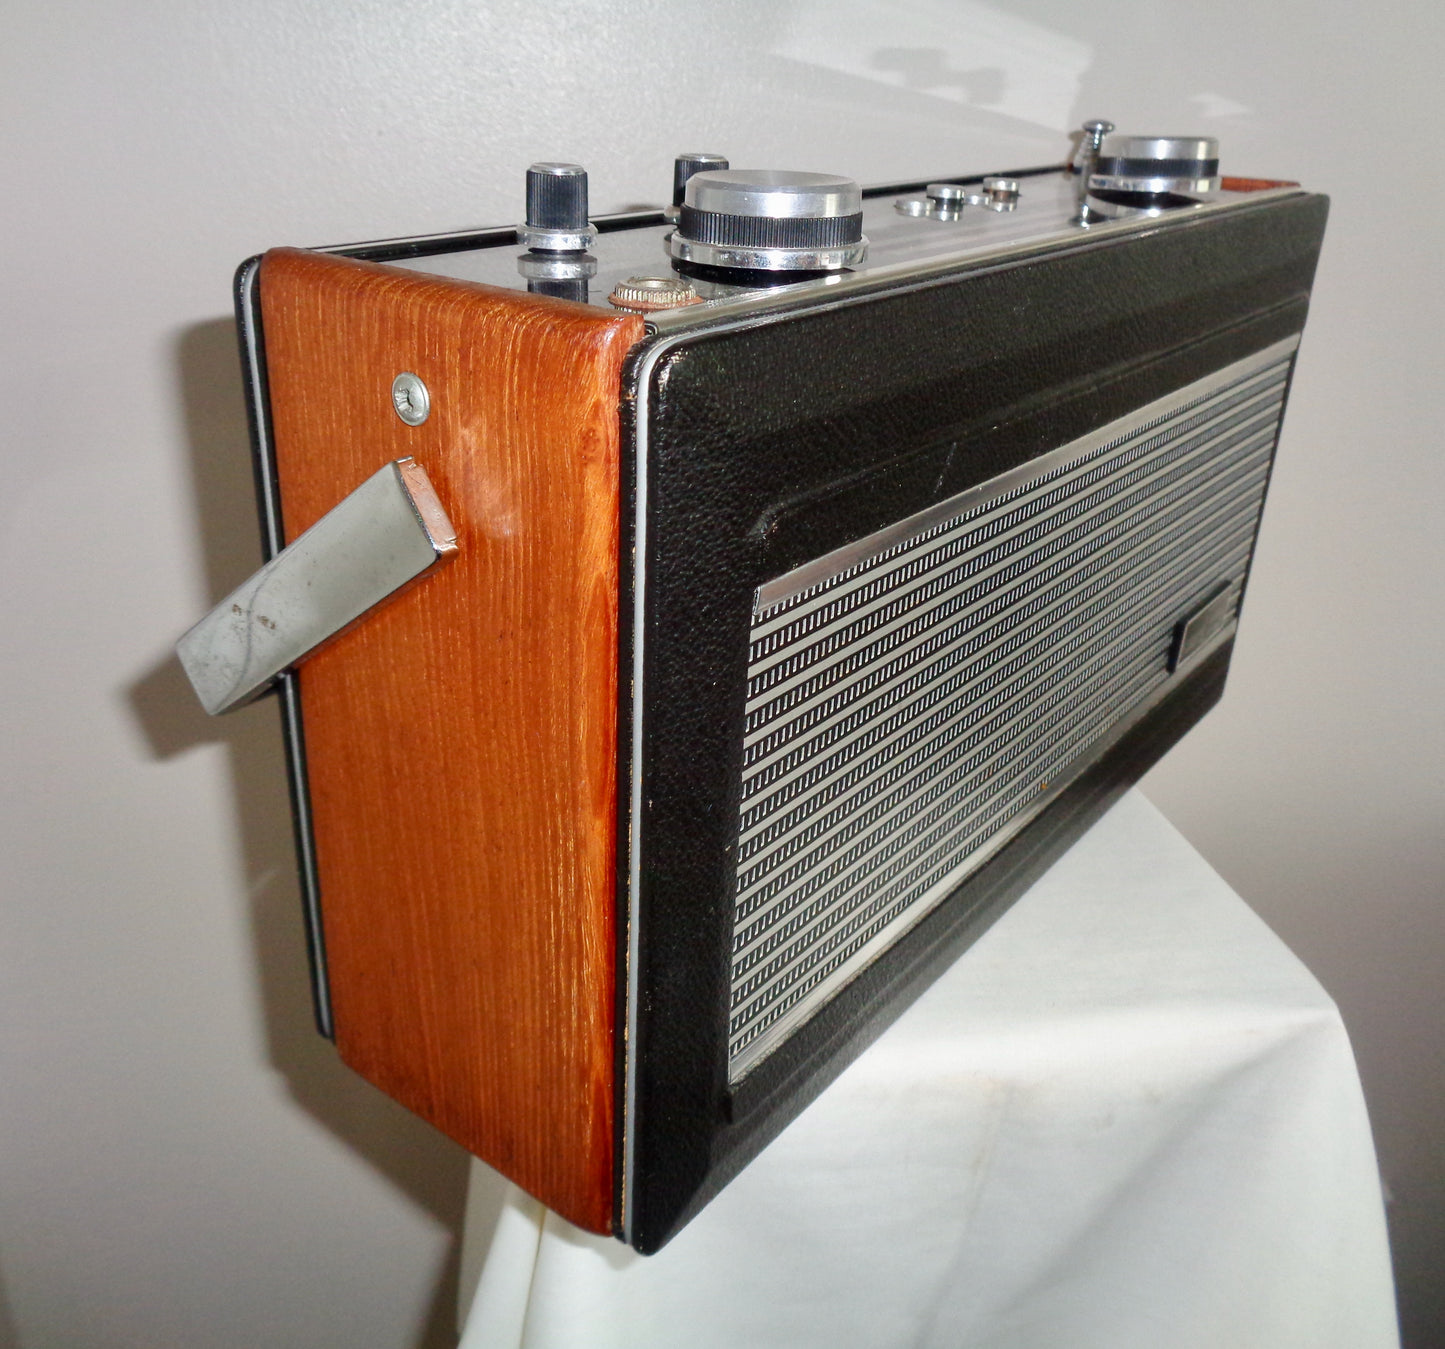 Vintage Roberts R900 MW/LW/FM Black Portable Transistor Radio